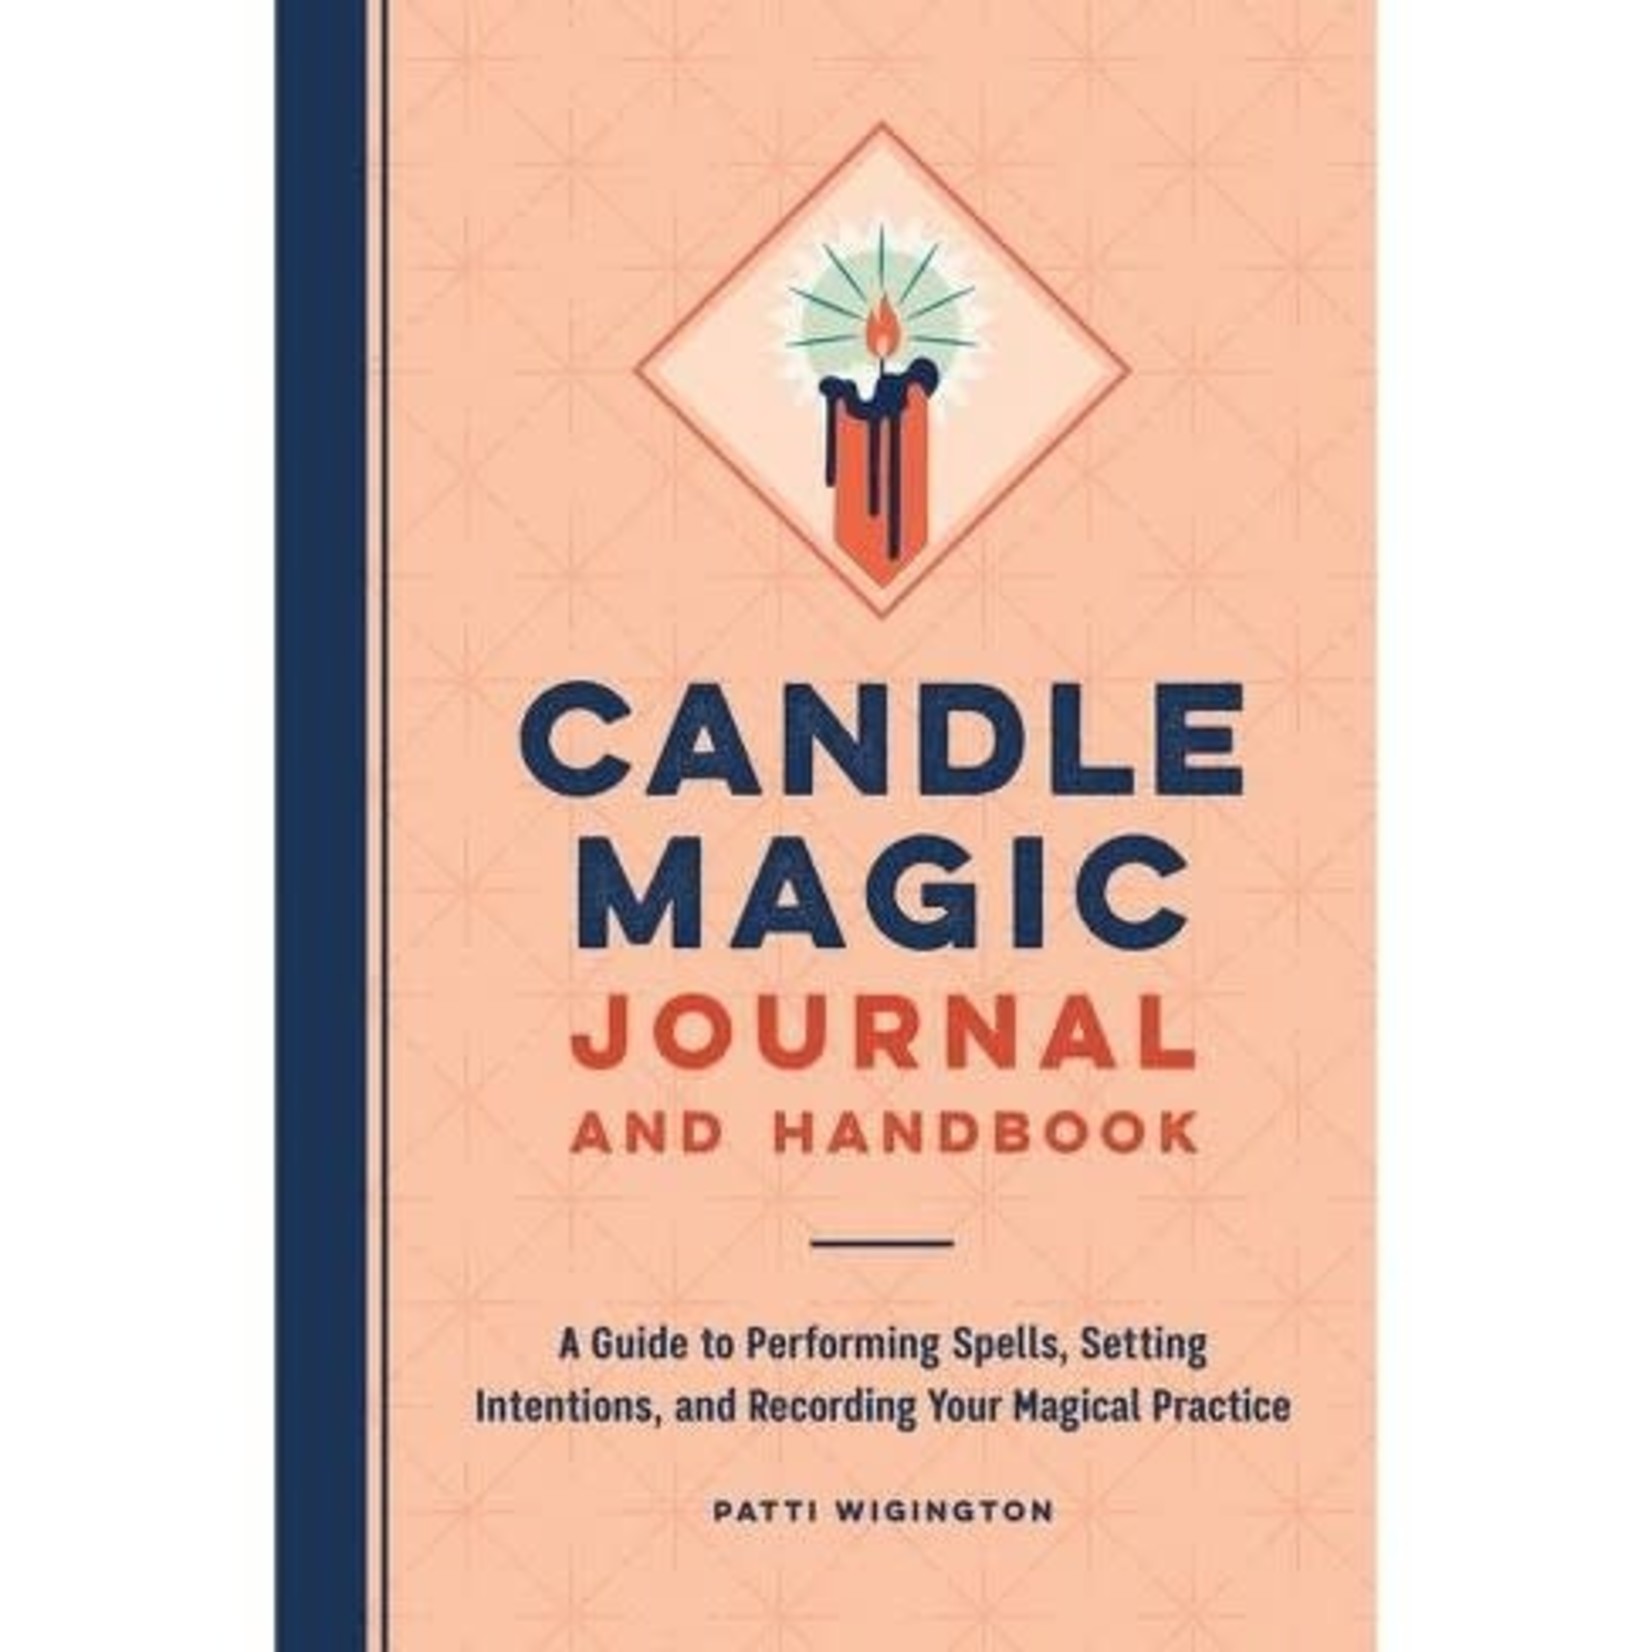 Candle Magic Journal and Handbook by Patti Wigington